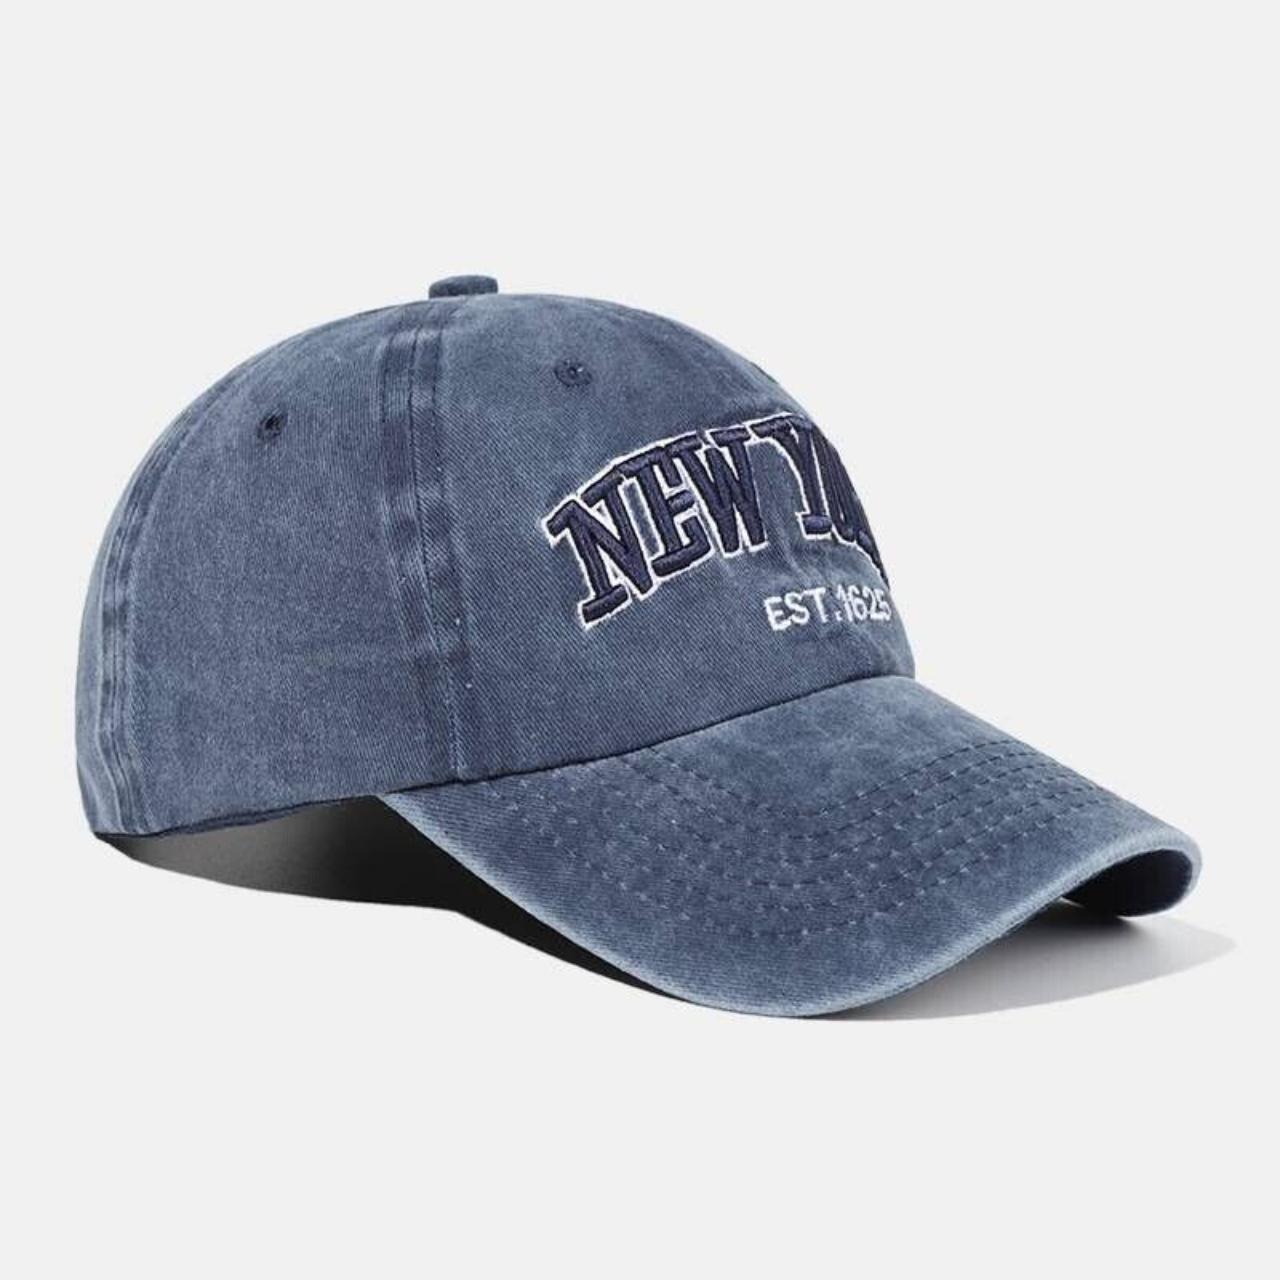 Adults New York City baseball cap blue, brand new,... - Depop